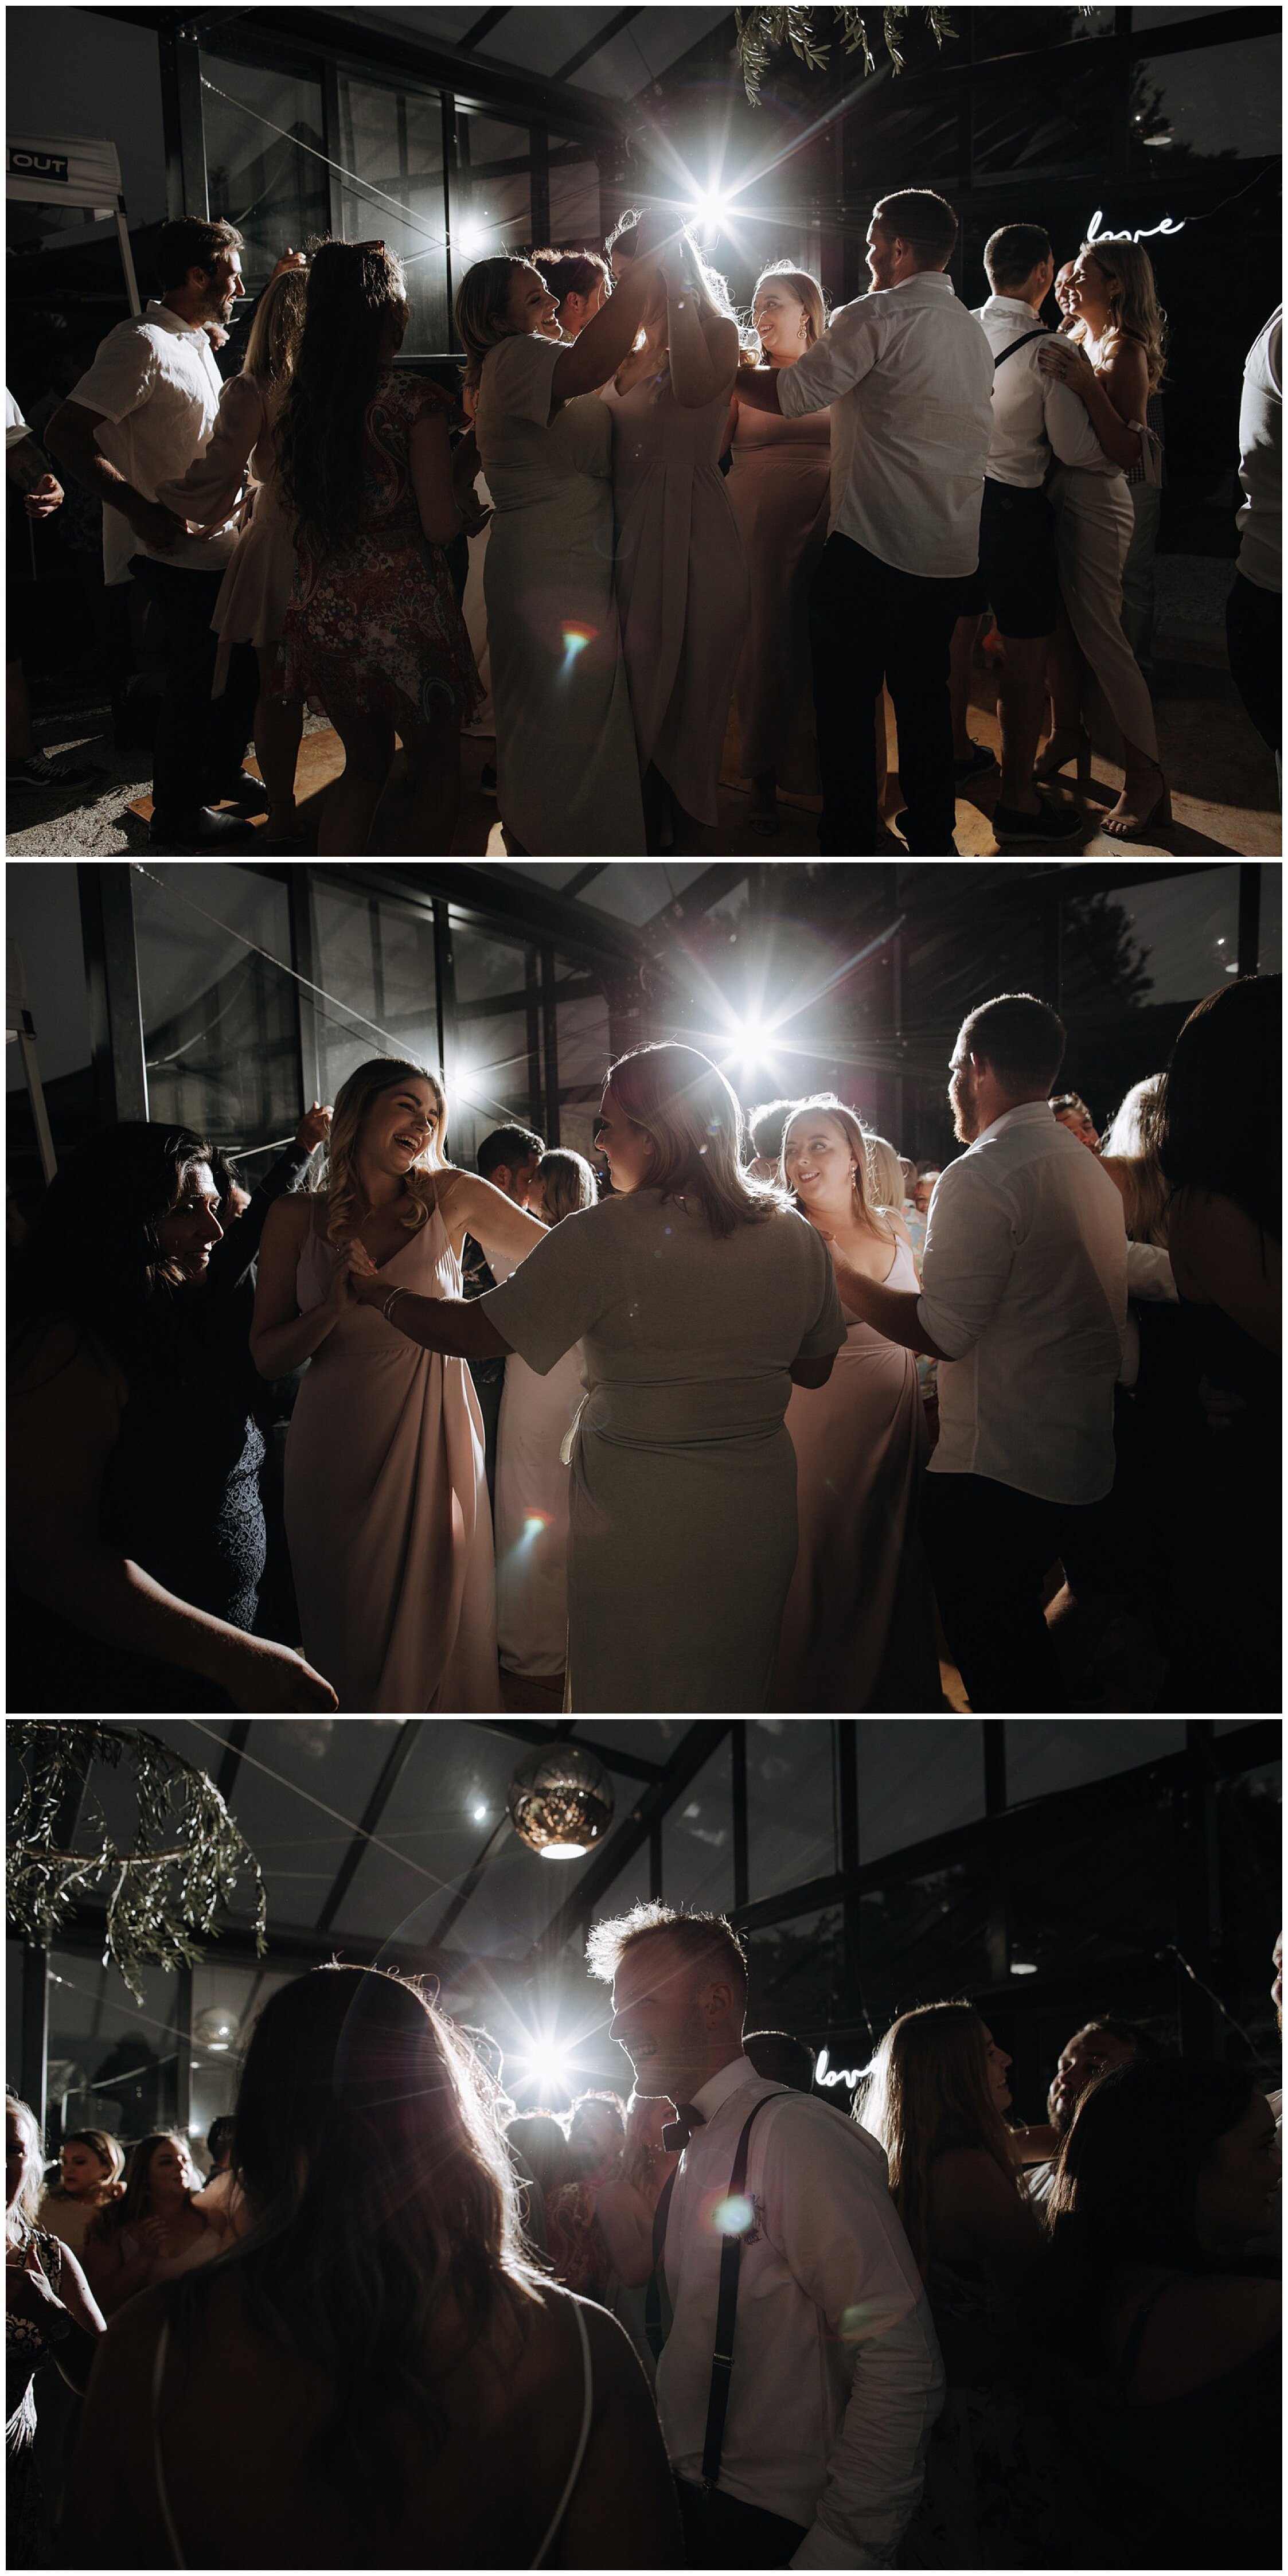 Zanda+Auckland+wedding+photographer+boho+retro+suspenders+groom+denim+jacket+bride+Te+Whai+Bay+Wines+venue+bright+glass+house+vineyard+photoshoot+New+Zealand_43.jpeg